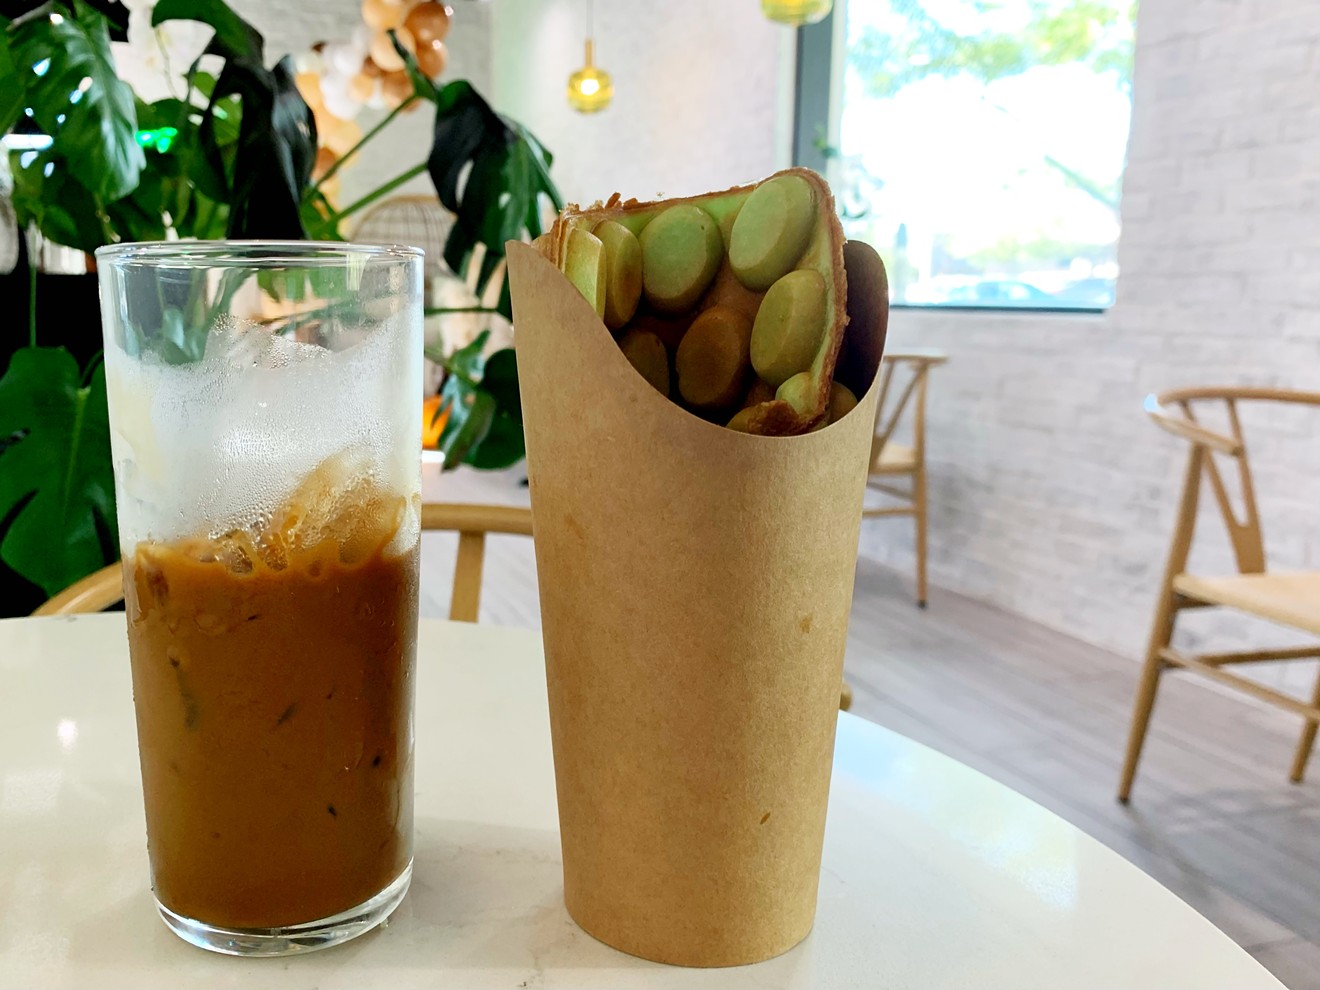 Uptown's Cafe Mollie offers distinctive treats like Vietnamese coffee and pandan waffles.